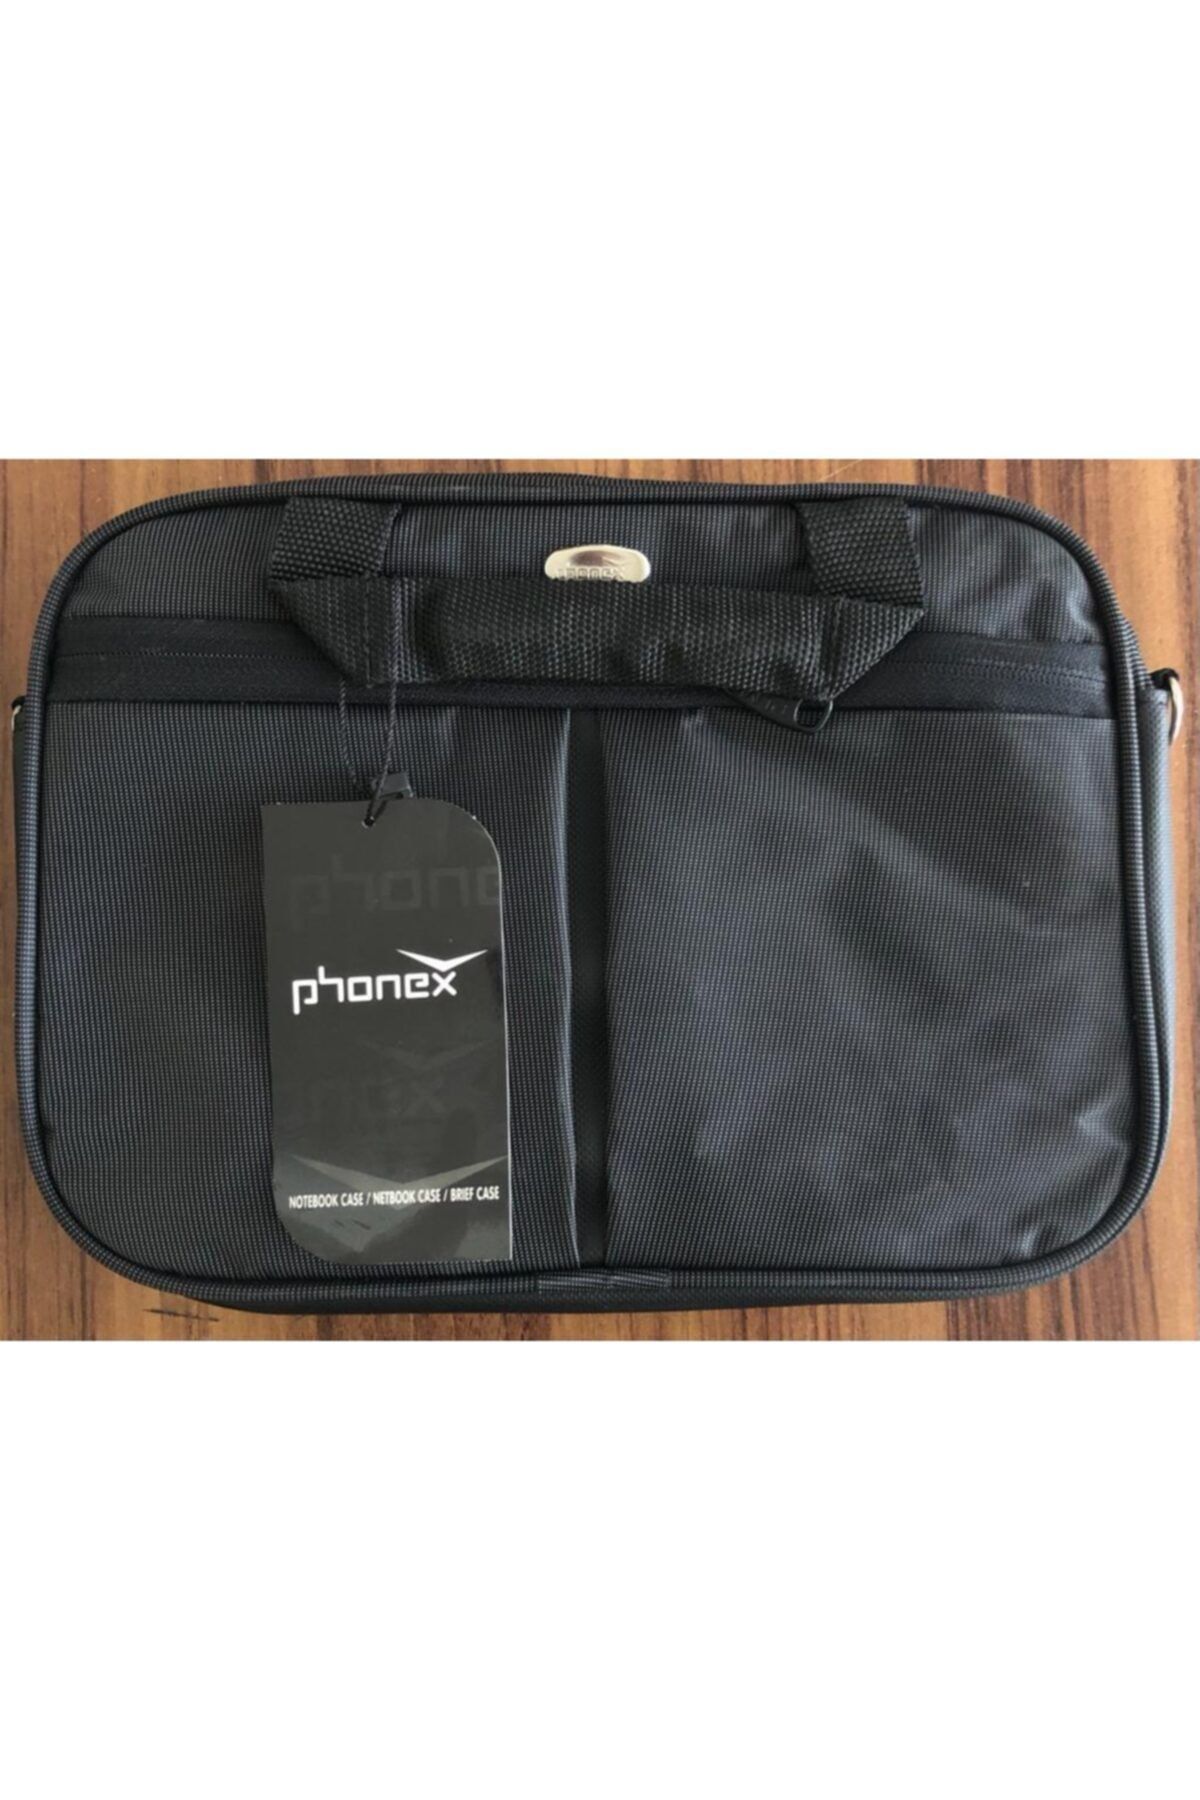 Phonex 100 Notebook Çantası Siyah 30 X 22 Cm